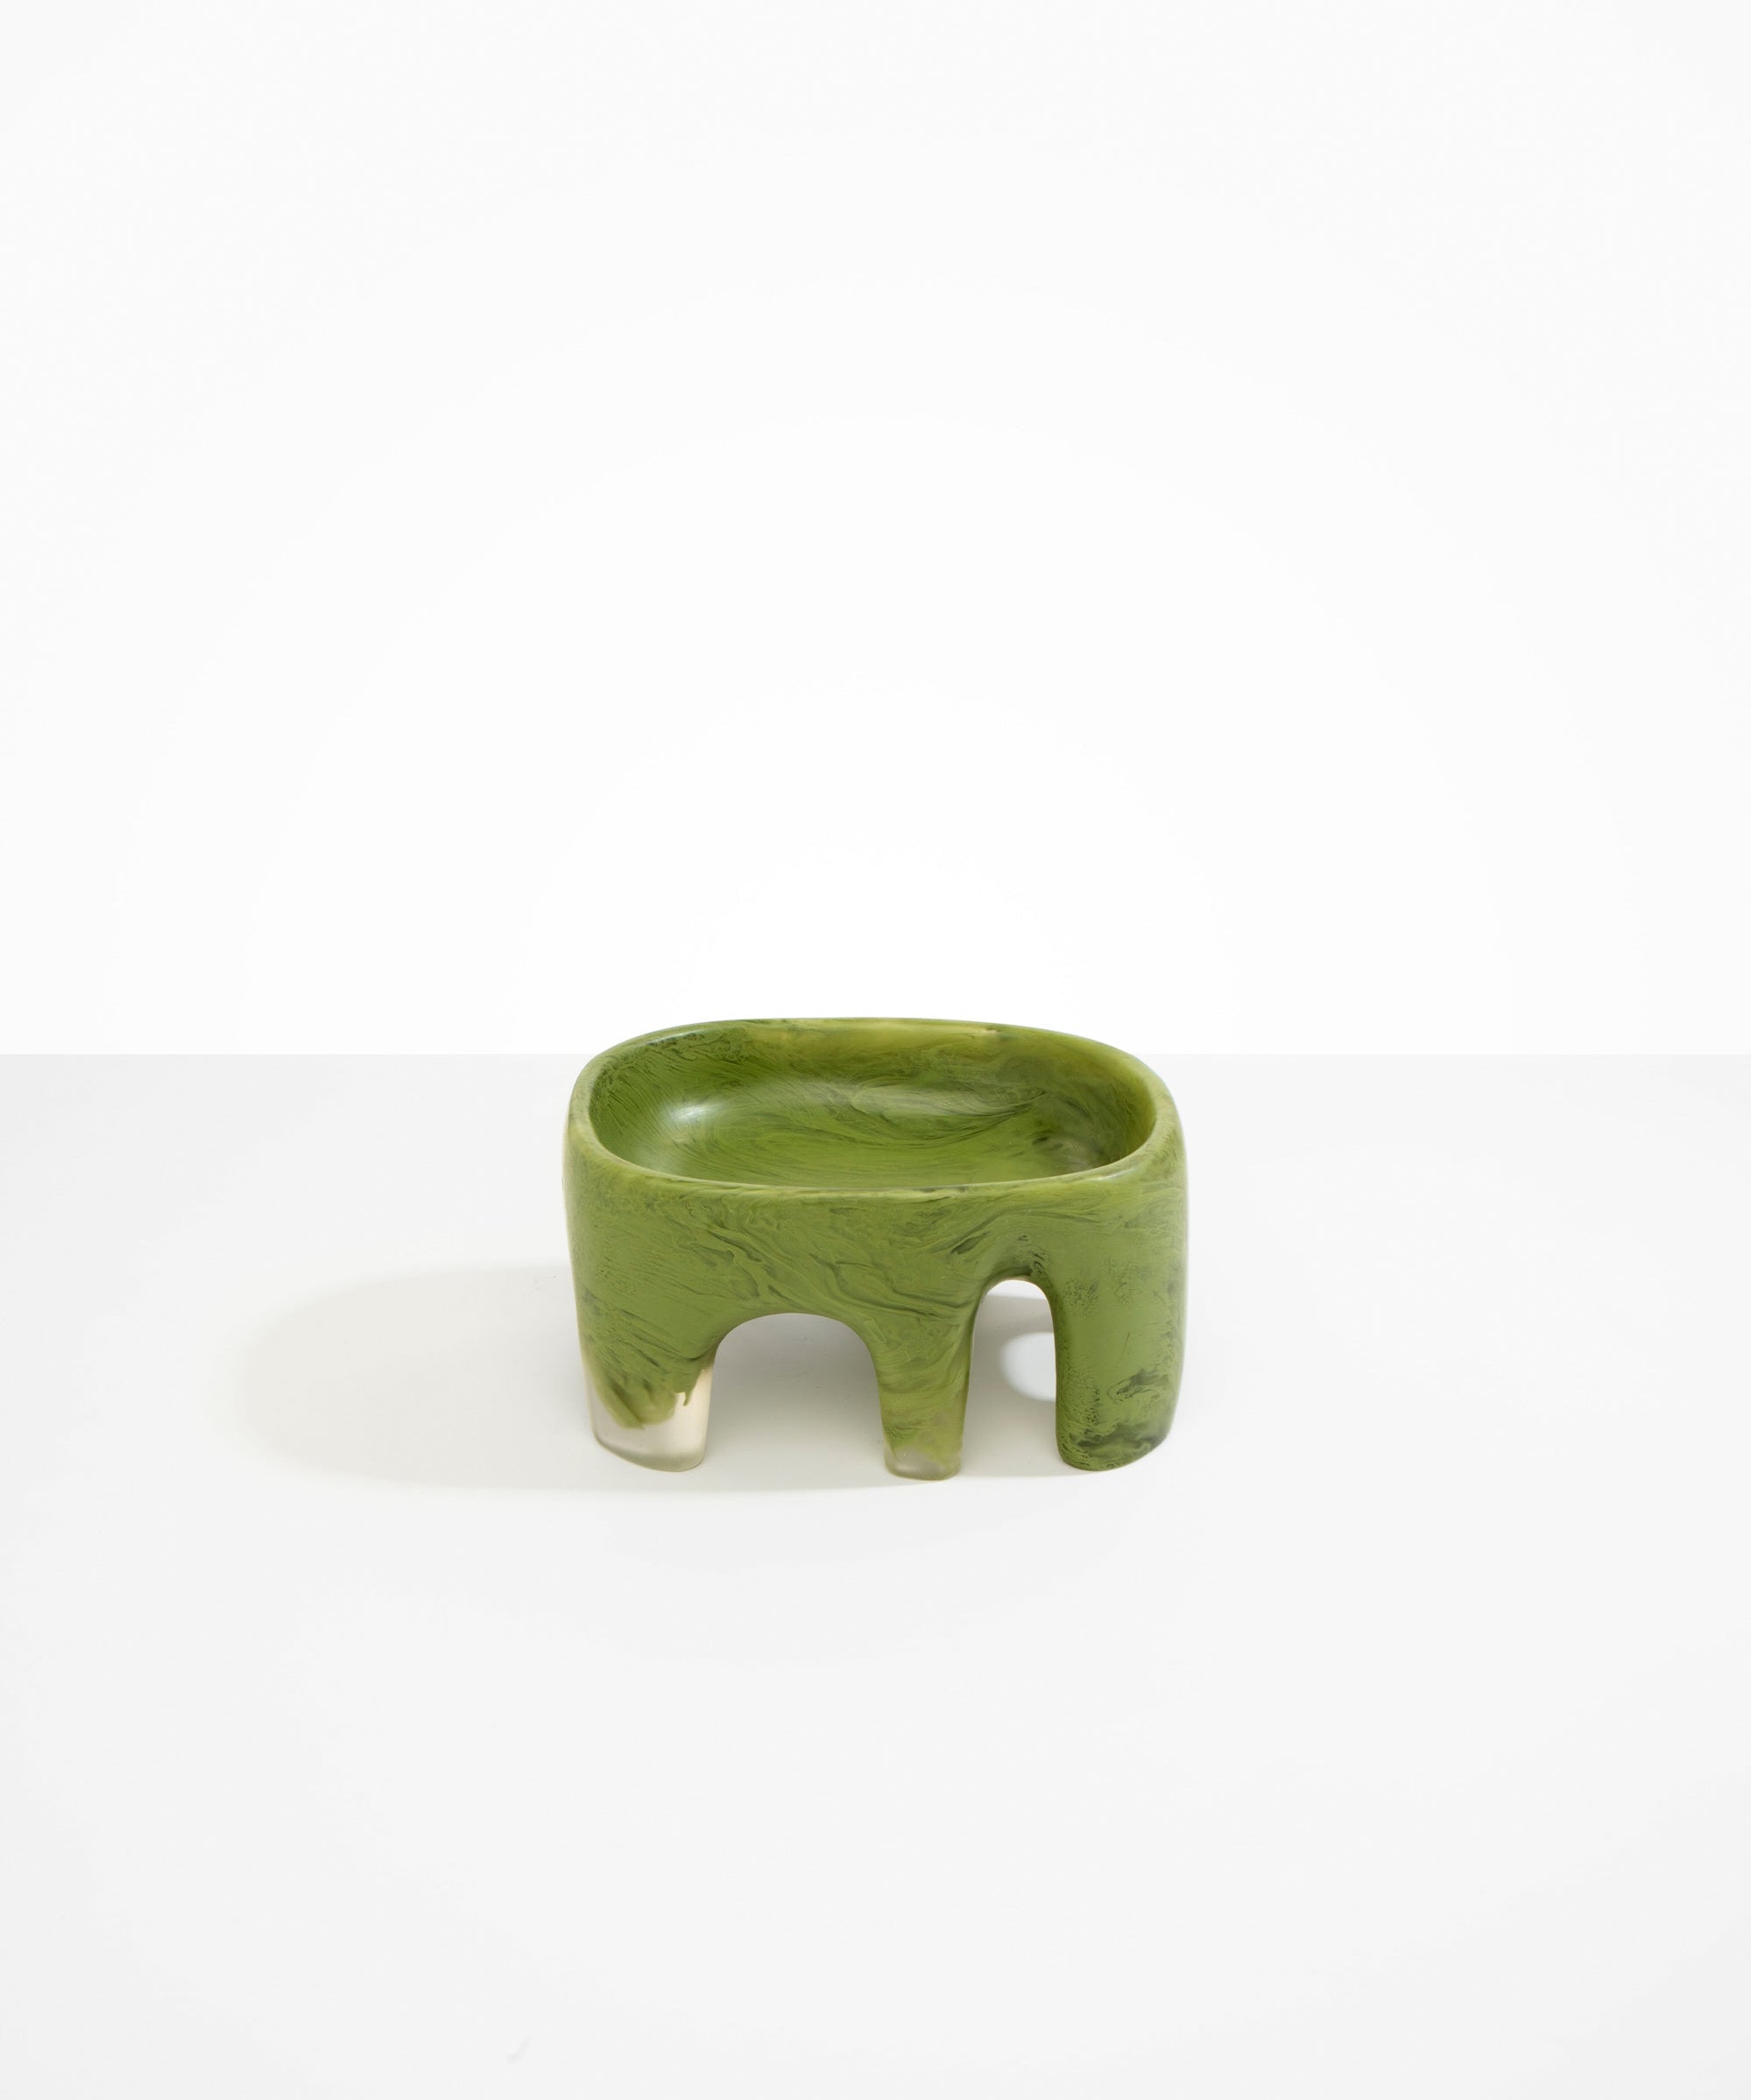 Dinosaur Designs Medium Branch Bowl Bowls in Olive color resin